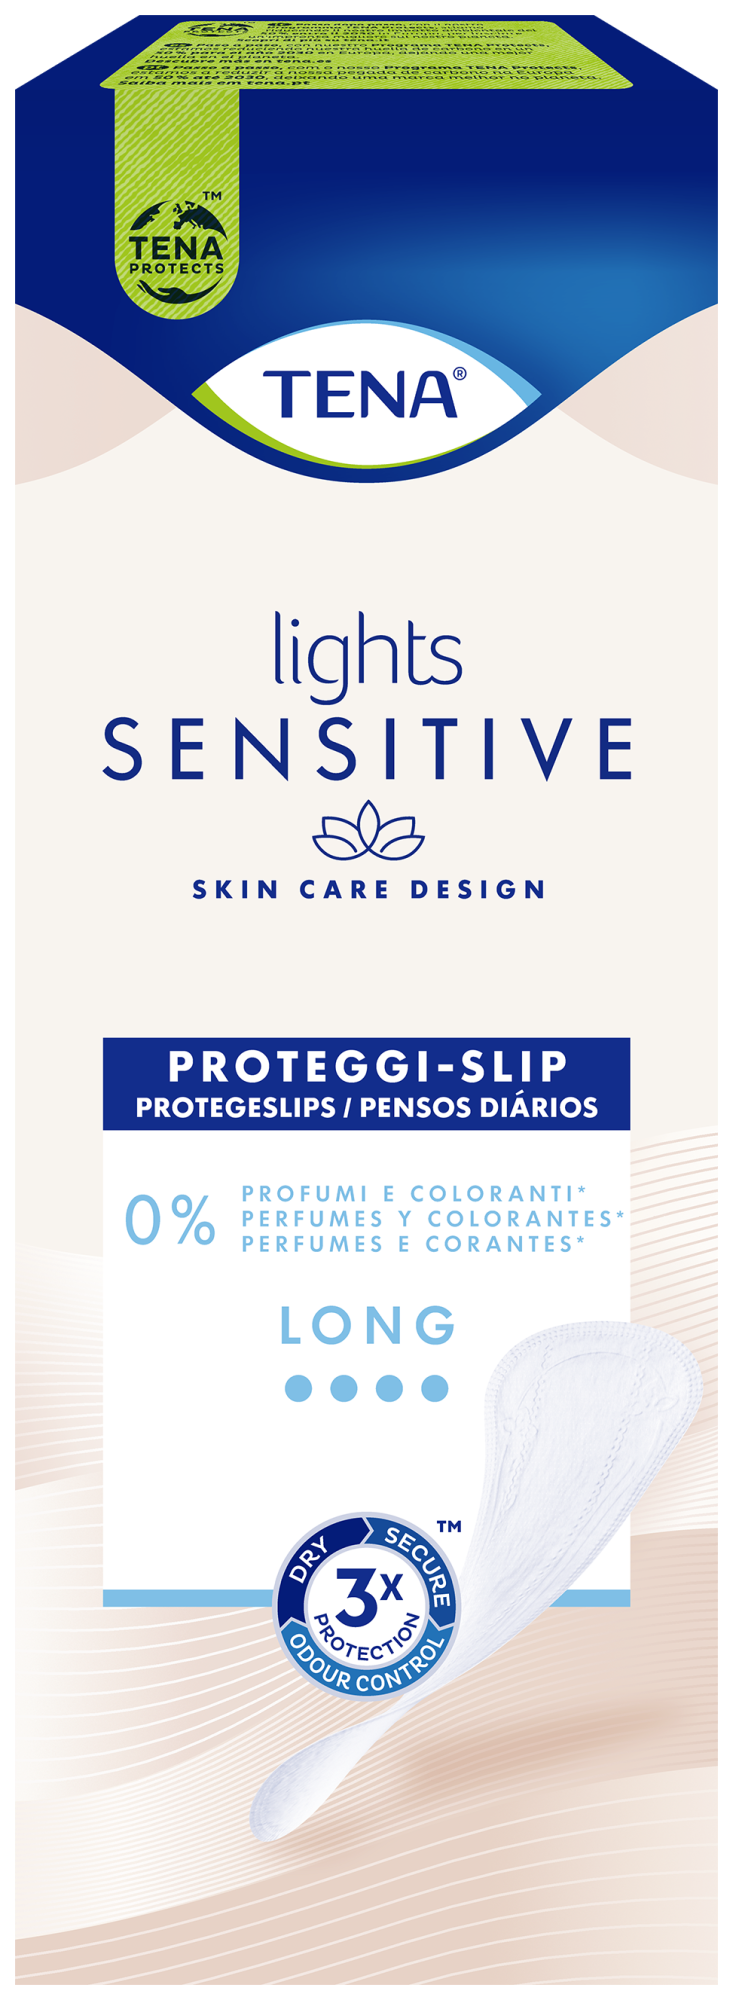 TENA Lights Sensitive Long | Proteggi-slip per perdite urinarie